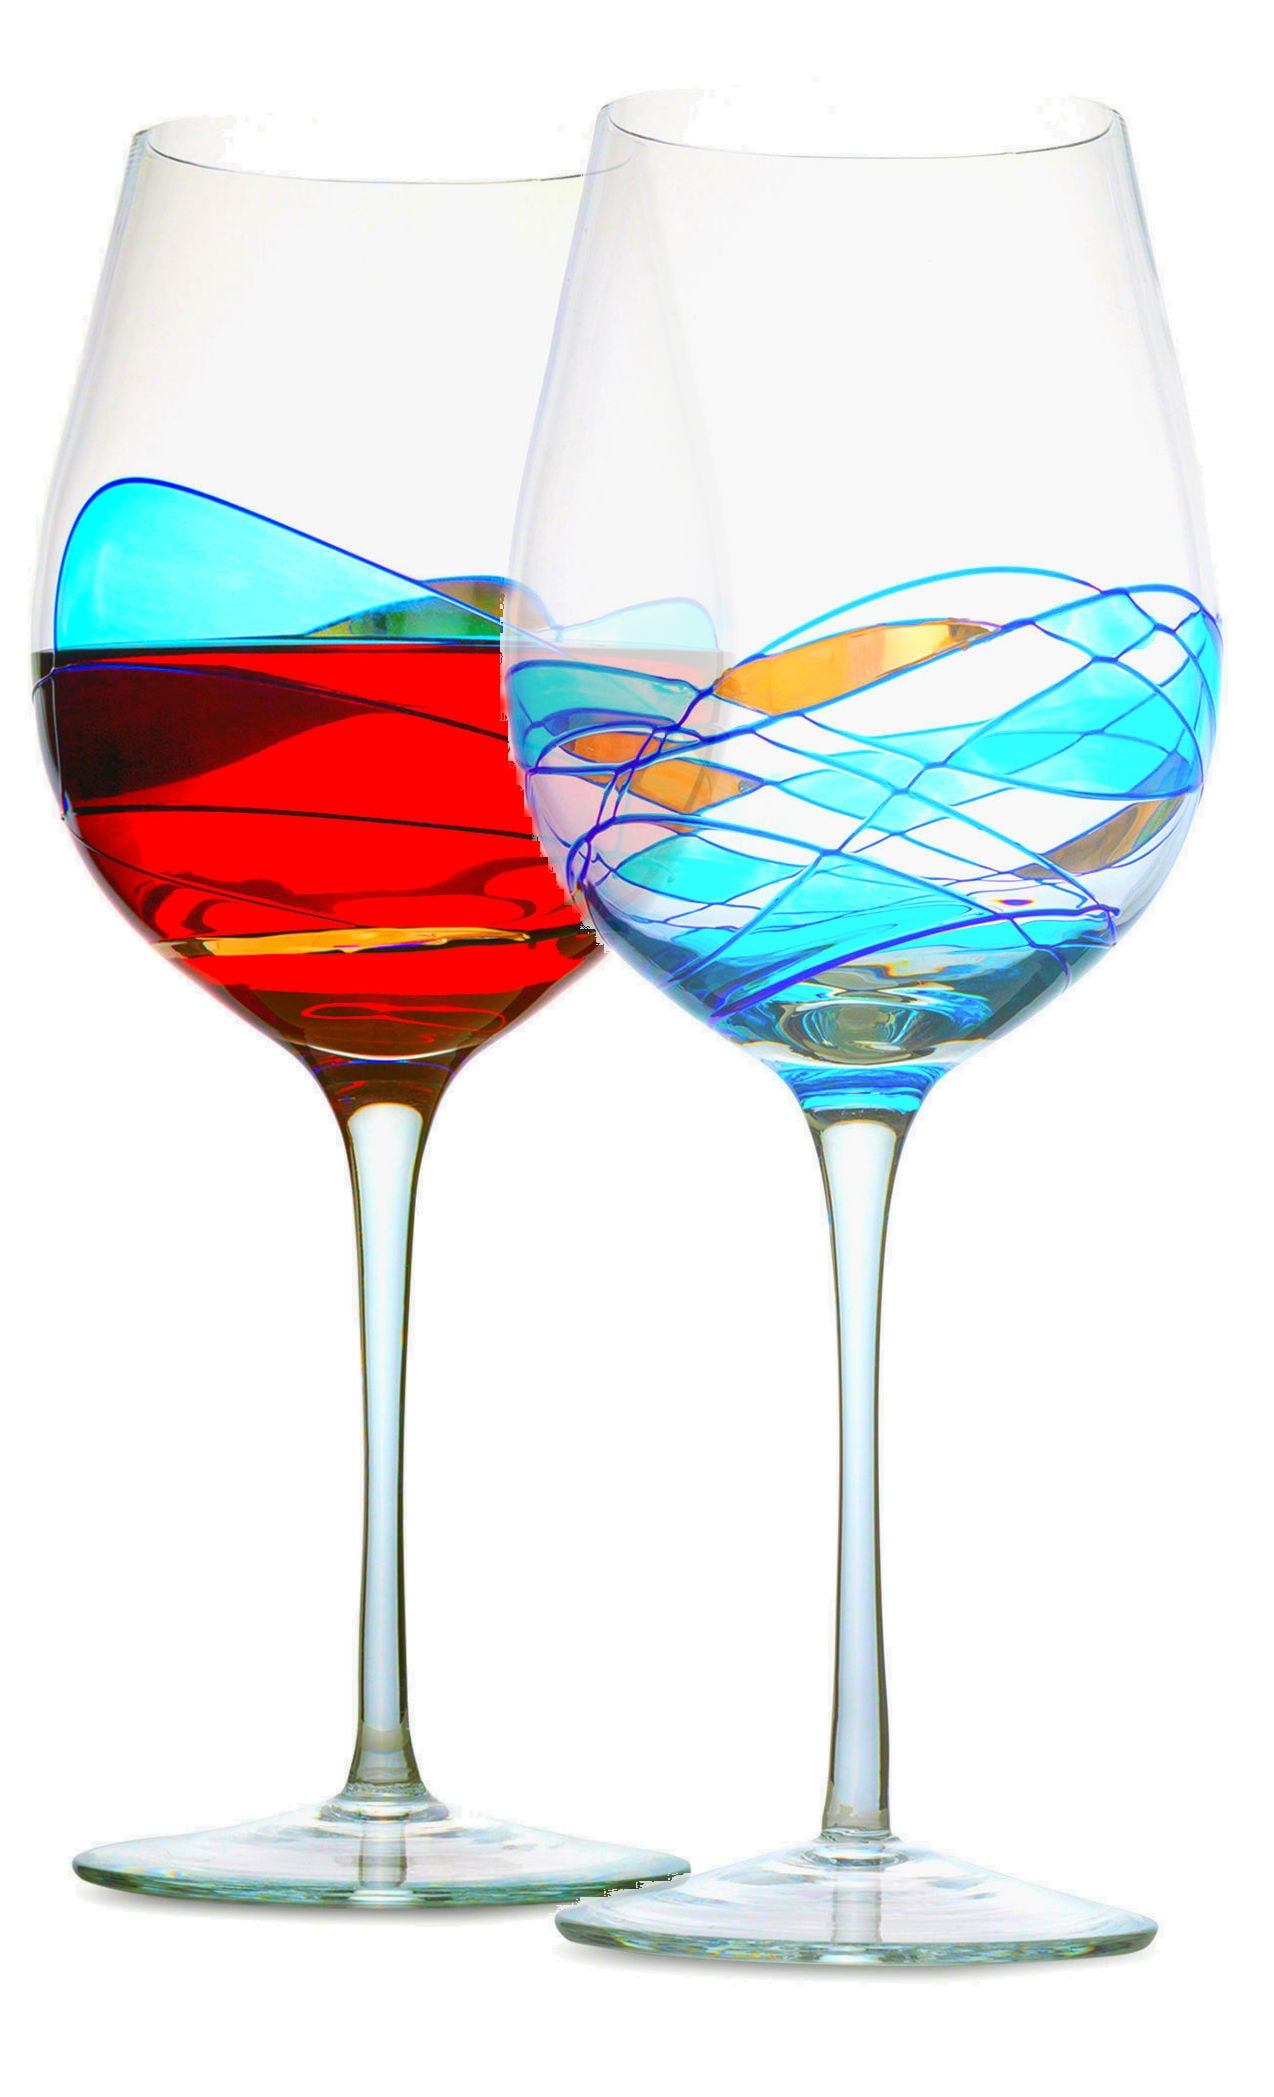 Buy Homkare Glass Paint, 12 Colors Vibrant Glass Paint for Wine